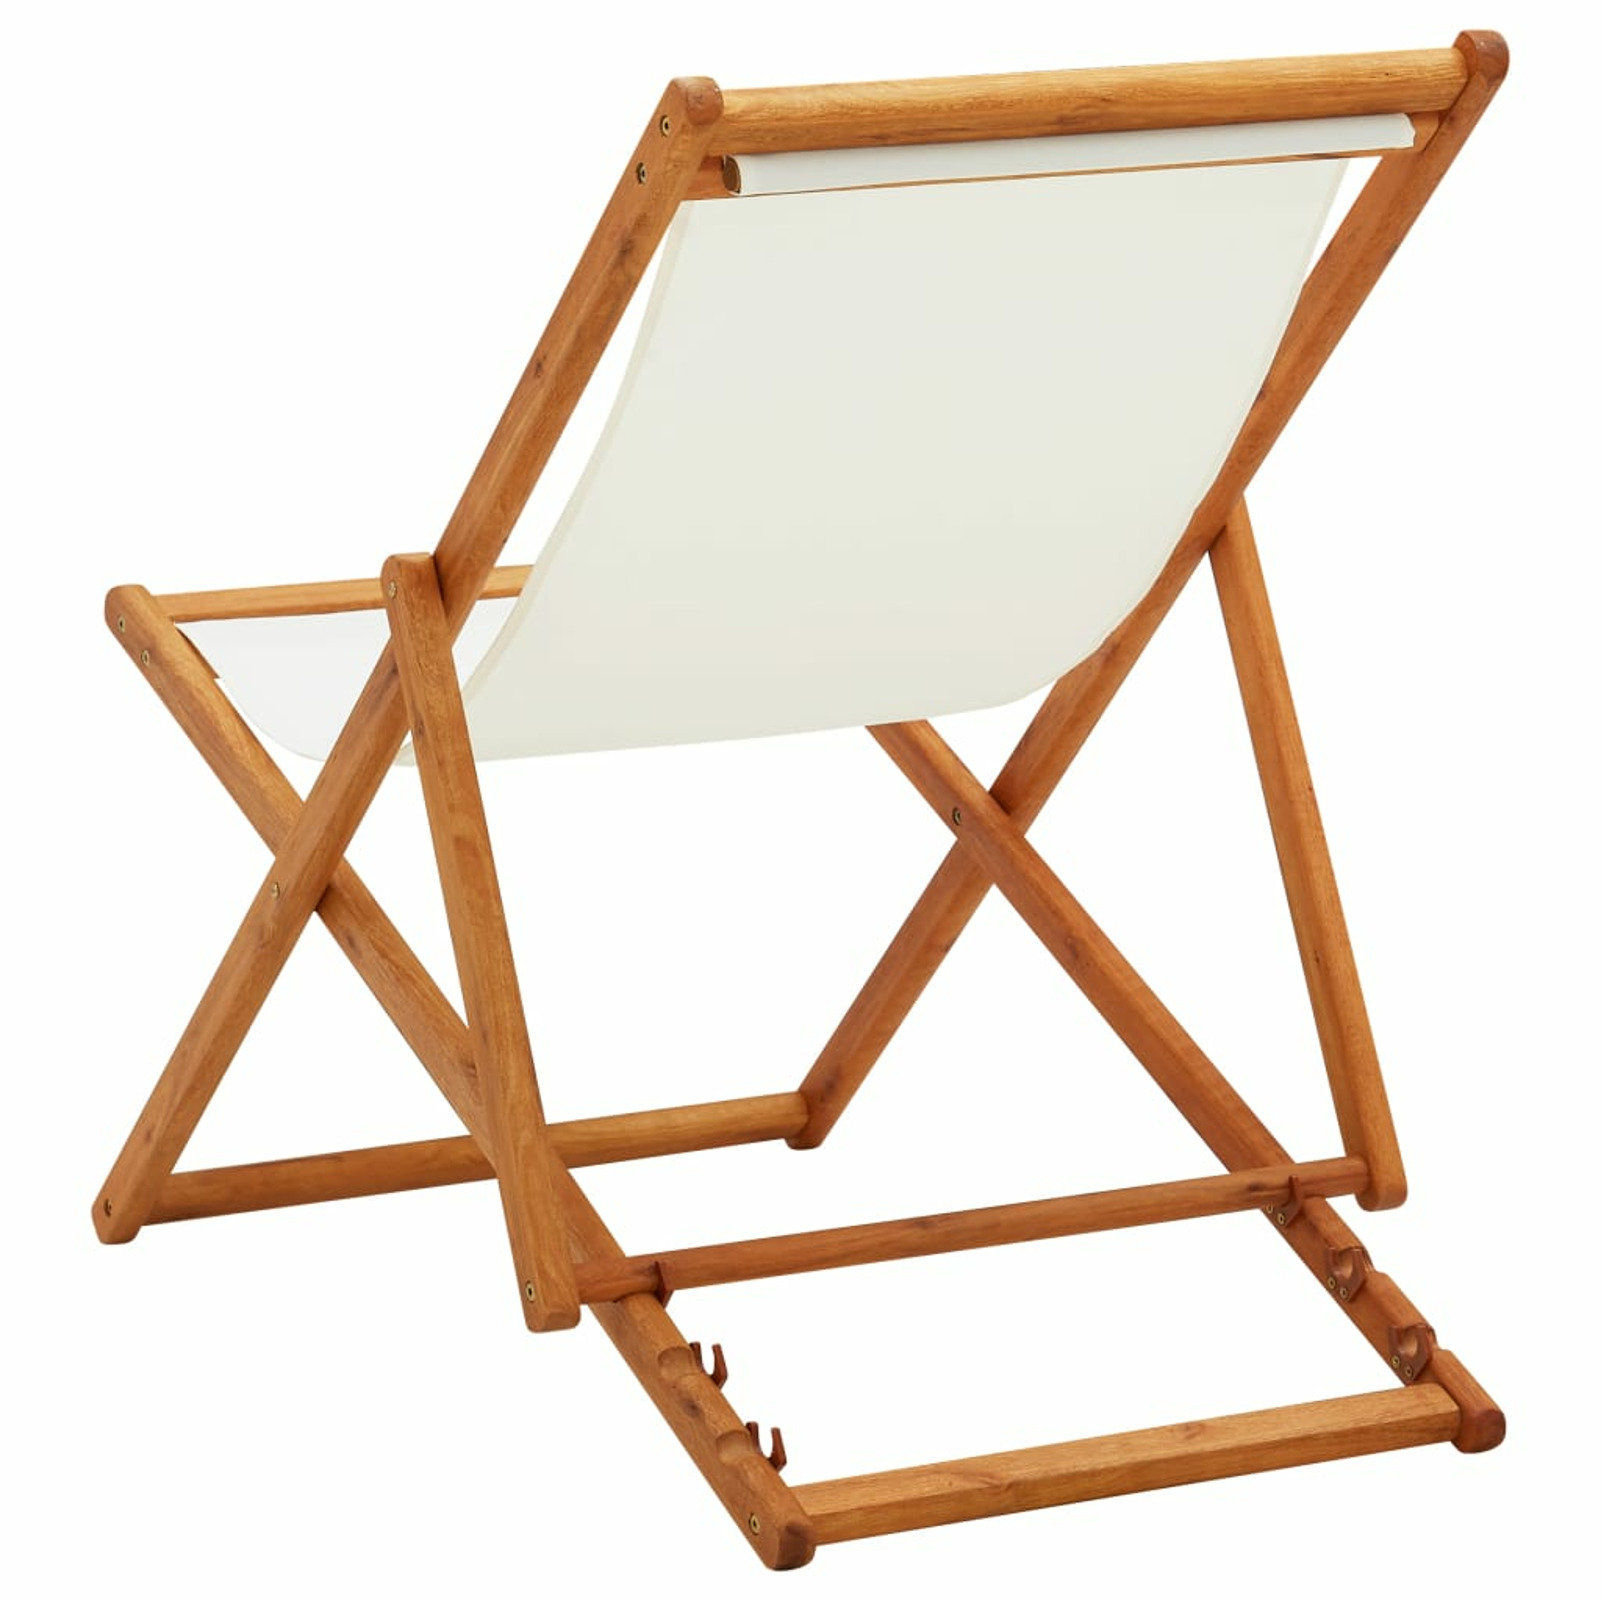 Suzicca Folding Beach Chair Eucalyptus Wood and Fabric White - image 3 of 6